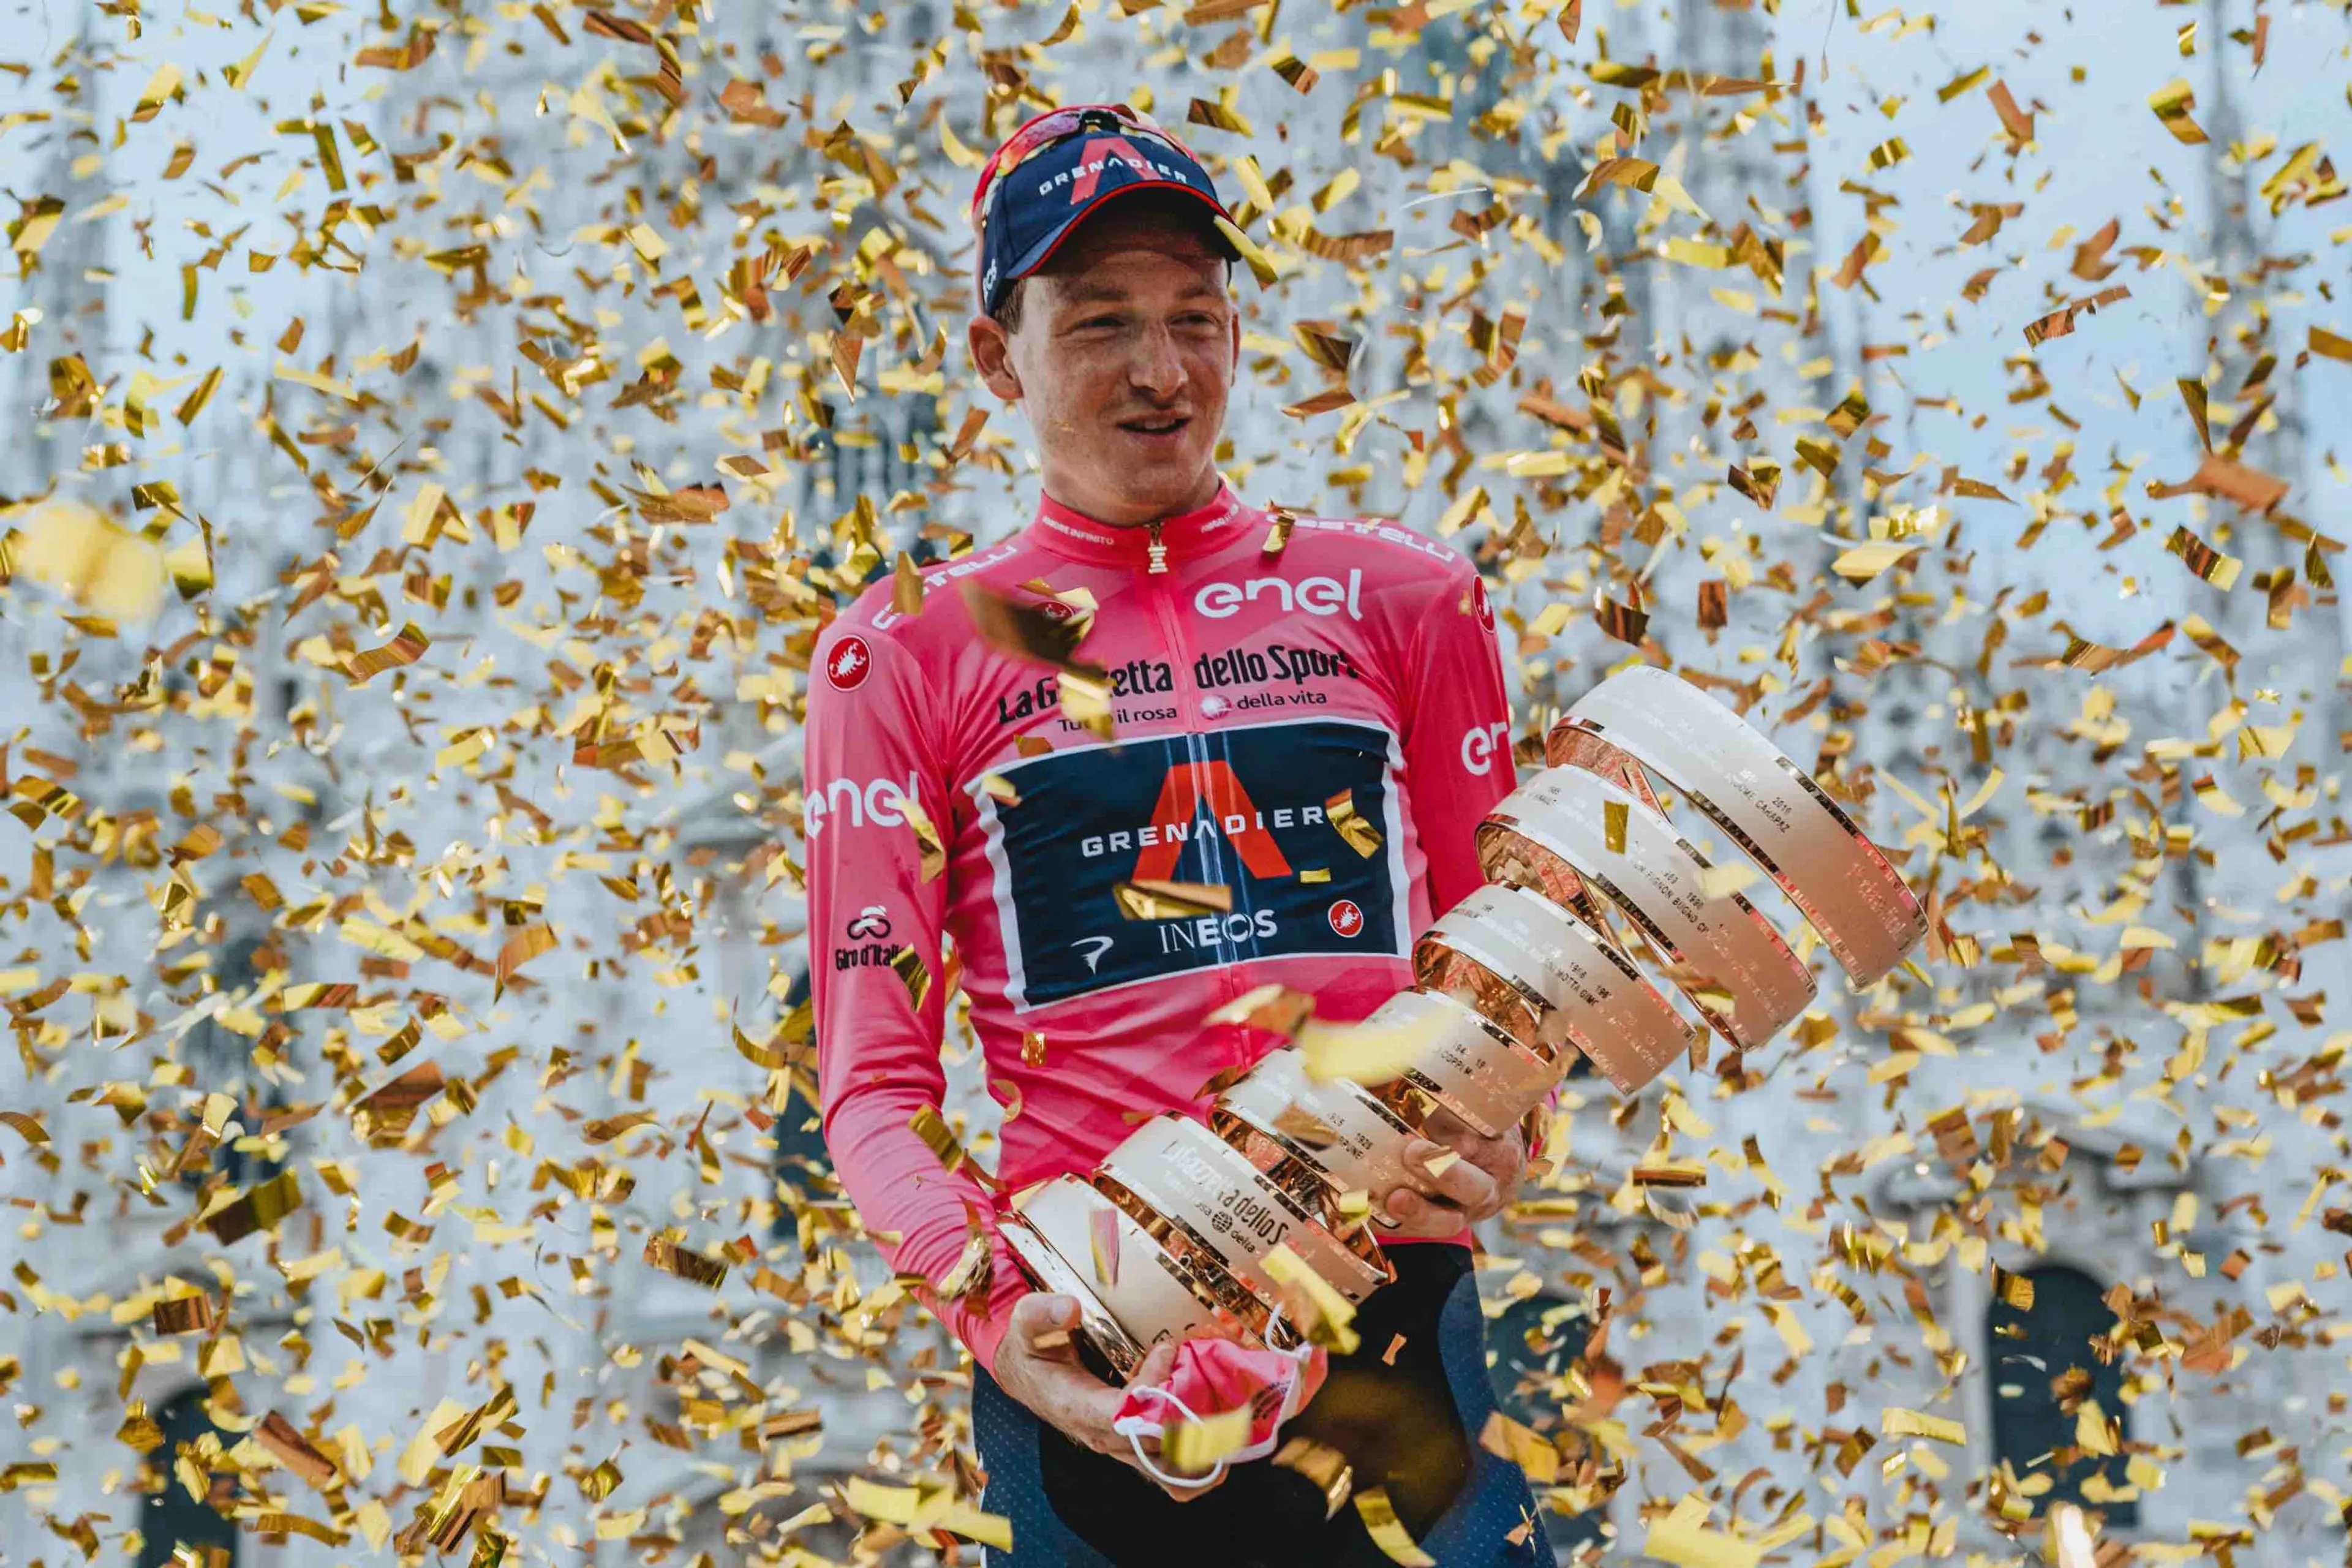 Russ Ellis (2019 Giro d'Italia winner) with the Maglia Rosa jersyey and Trofeo Senza Fine